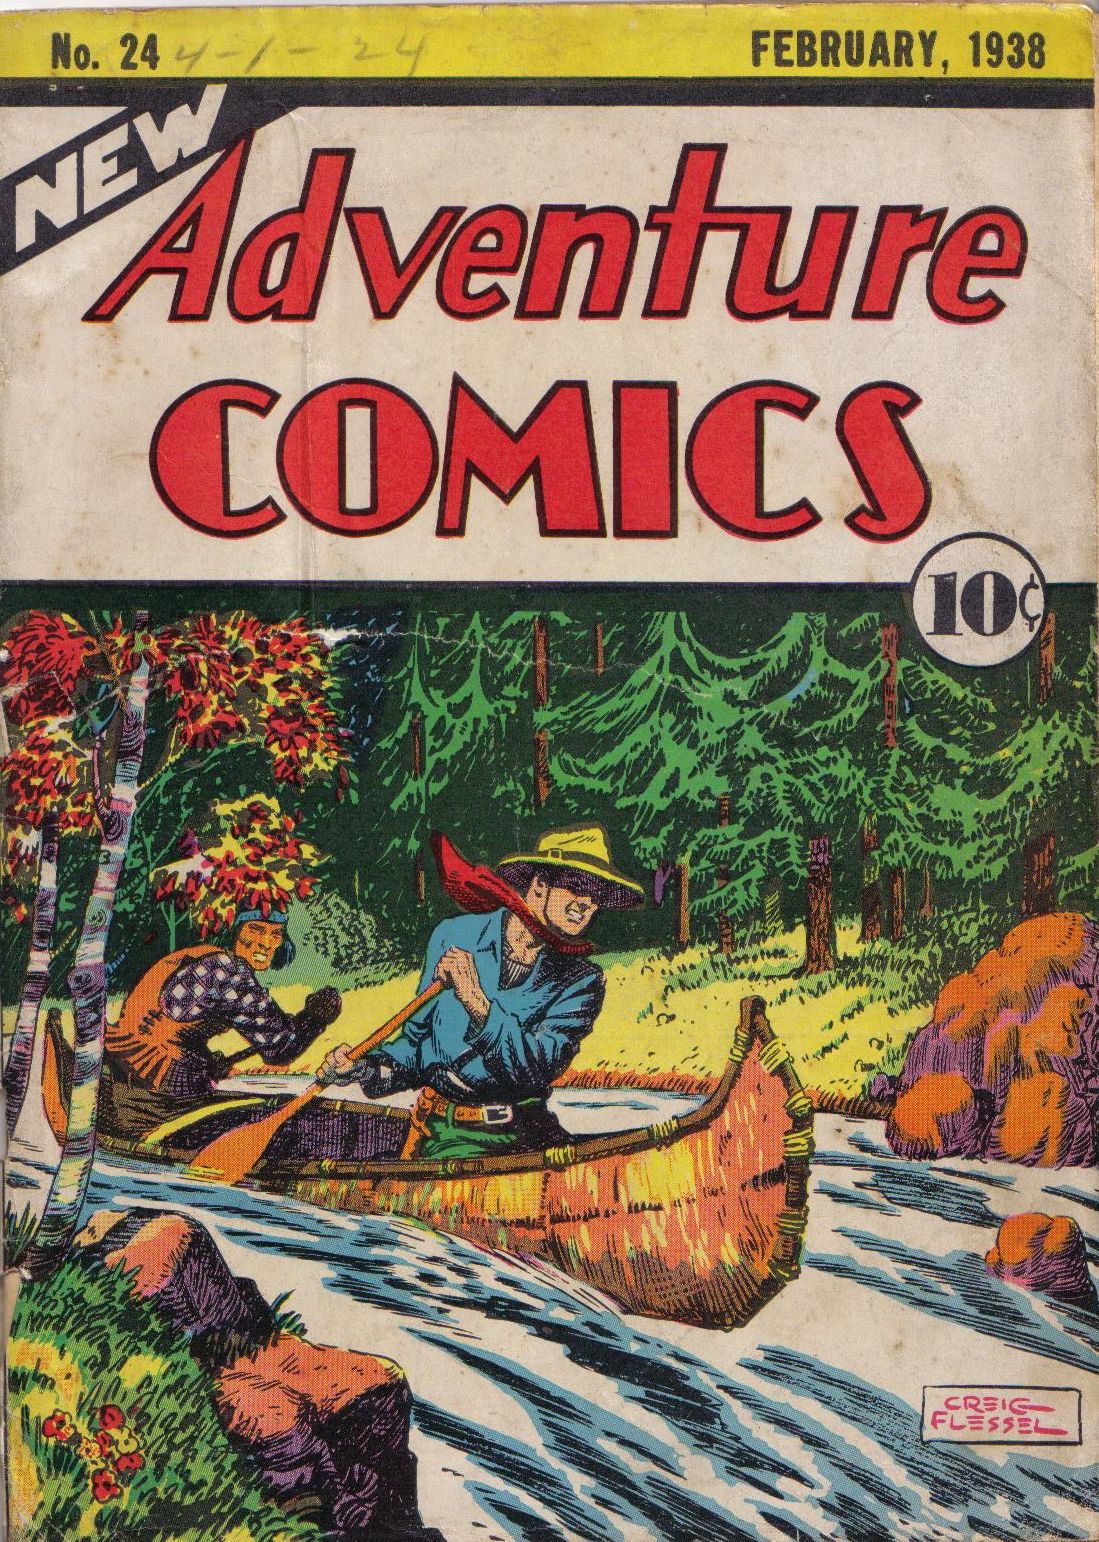 Days Of Adventure New Adventure Comics 24 February 1938